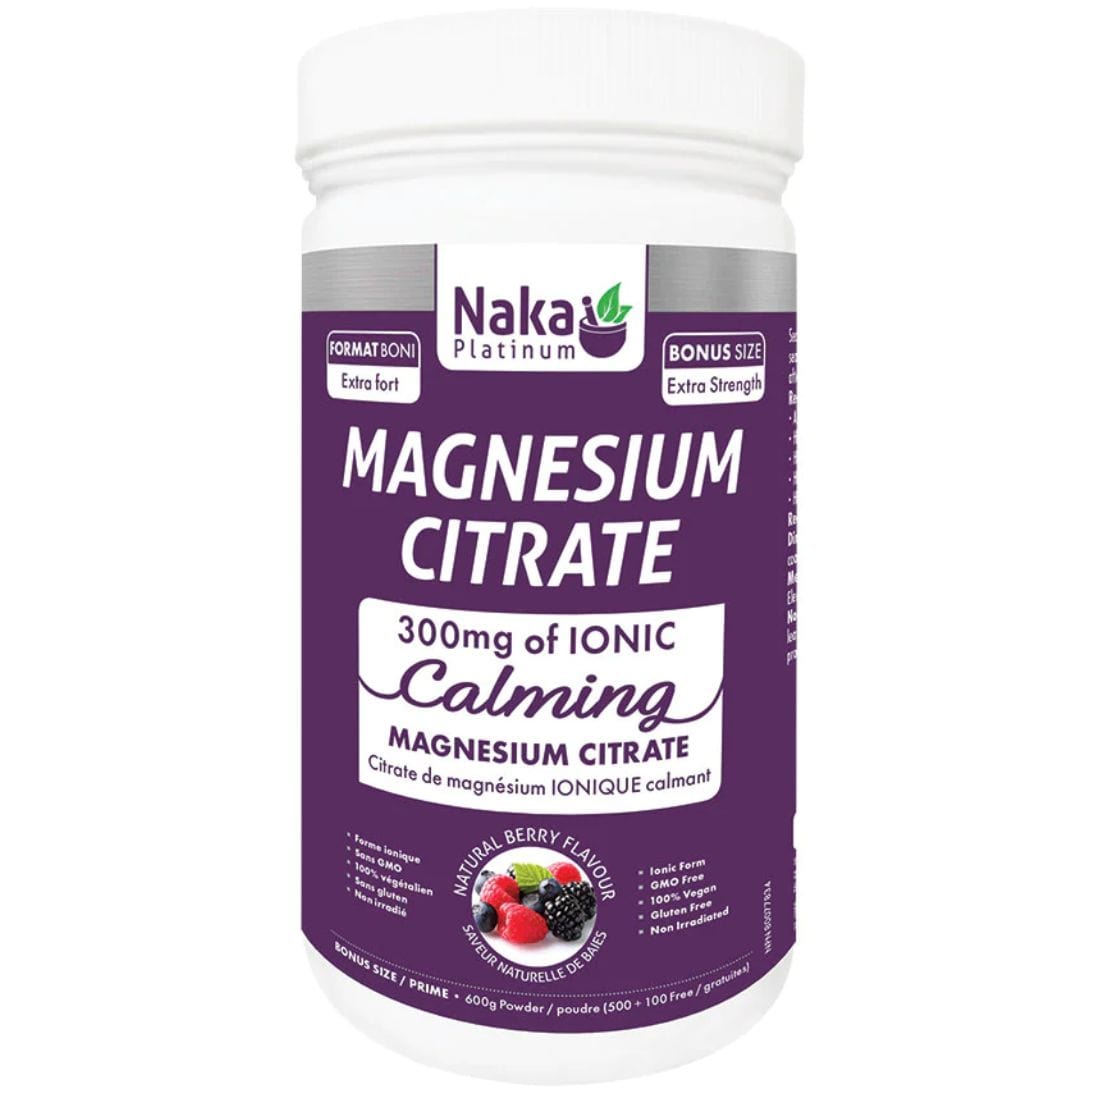 Naka Magnesium Citrate Calming Powder, 300mg Ionic Magnesium